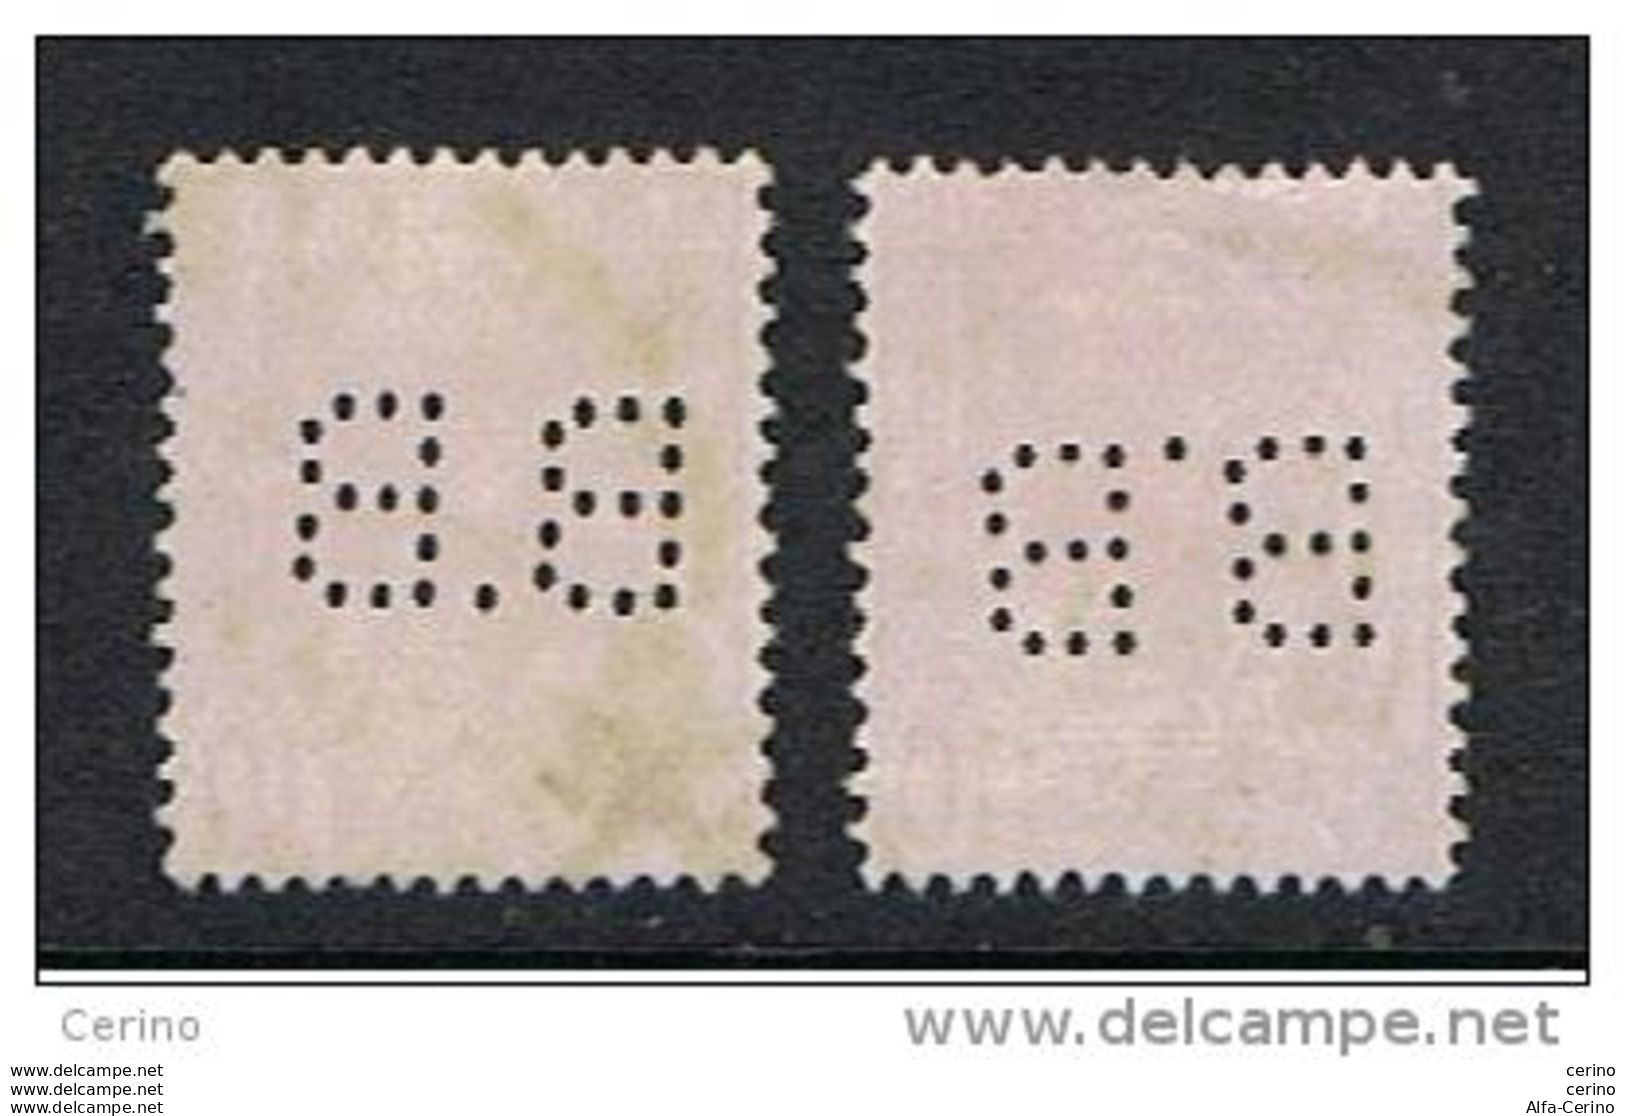 ALGERIA - VARIETA':  1926  VEDUTA  -  10 C. LILLA  US. -  PERFIN  -  RIPETUTO  2  VOLTE  -  YV/TELL. 38 - Used Stamps